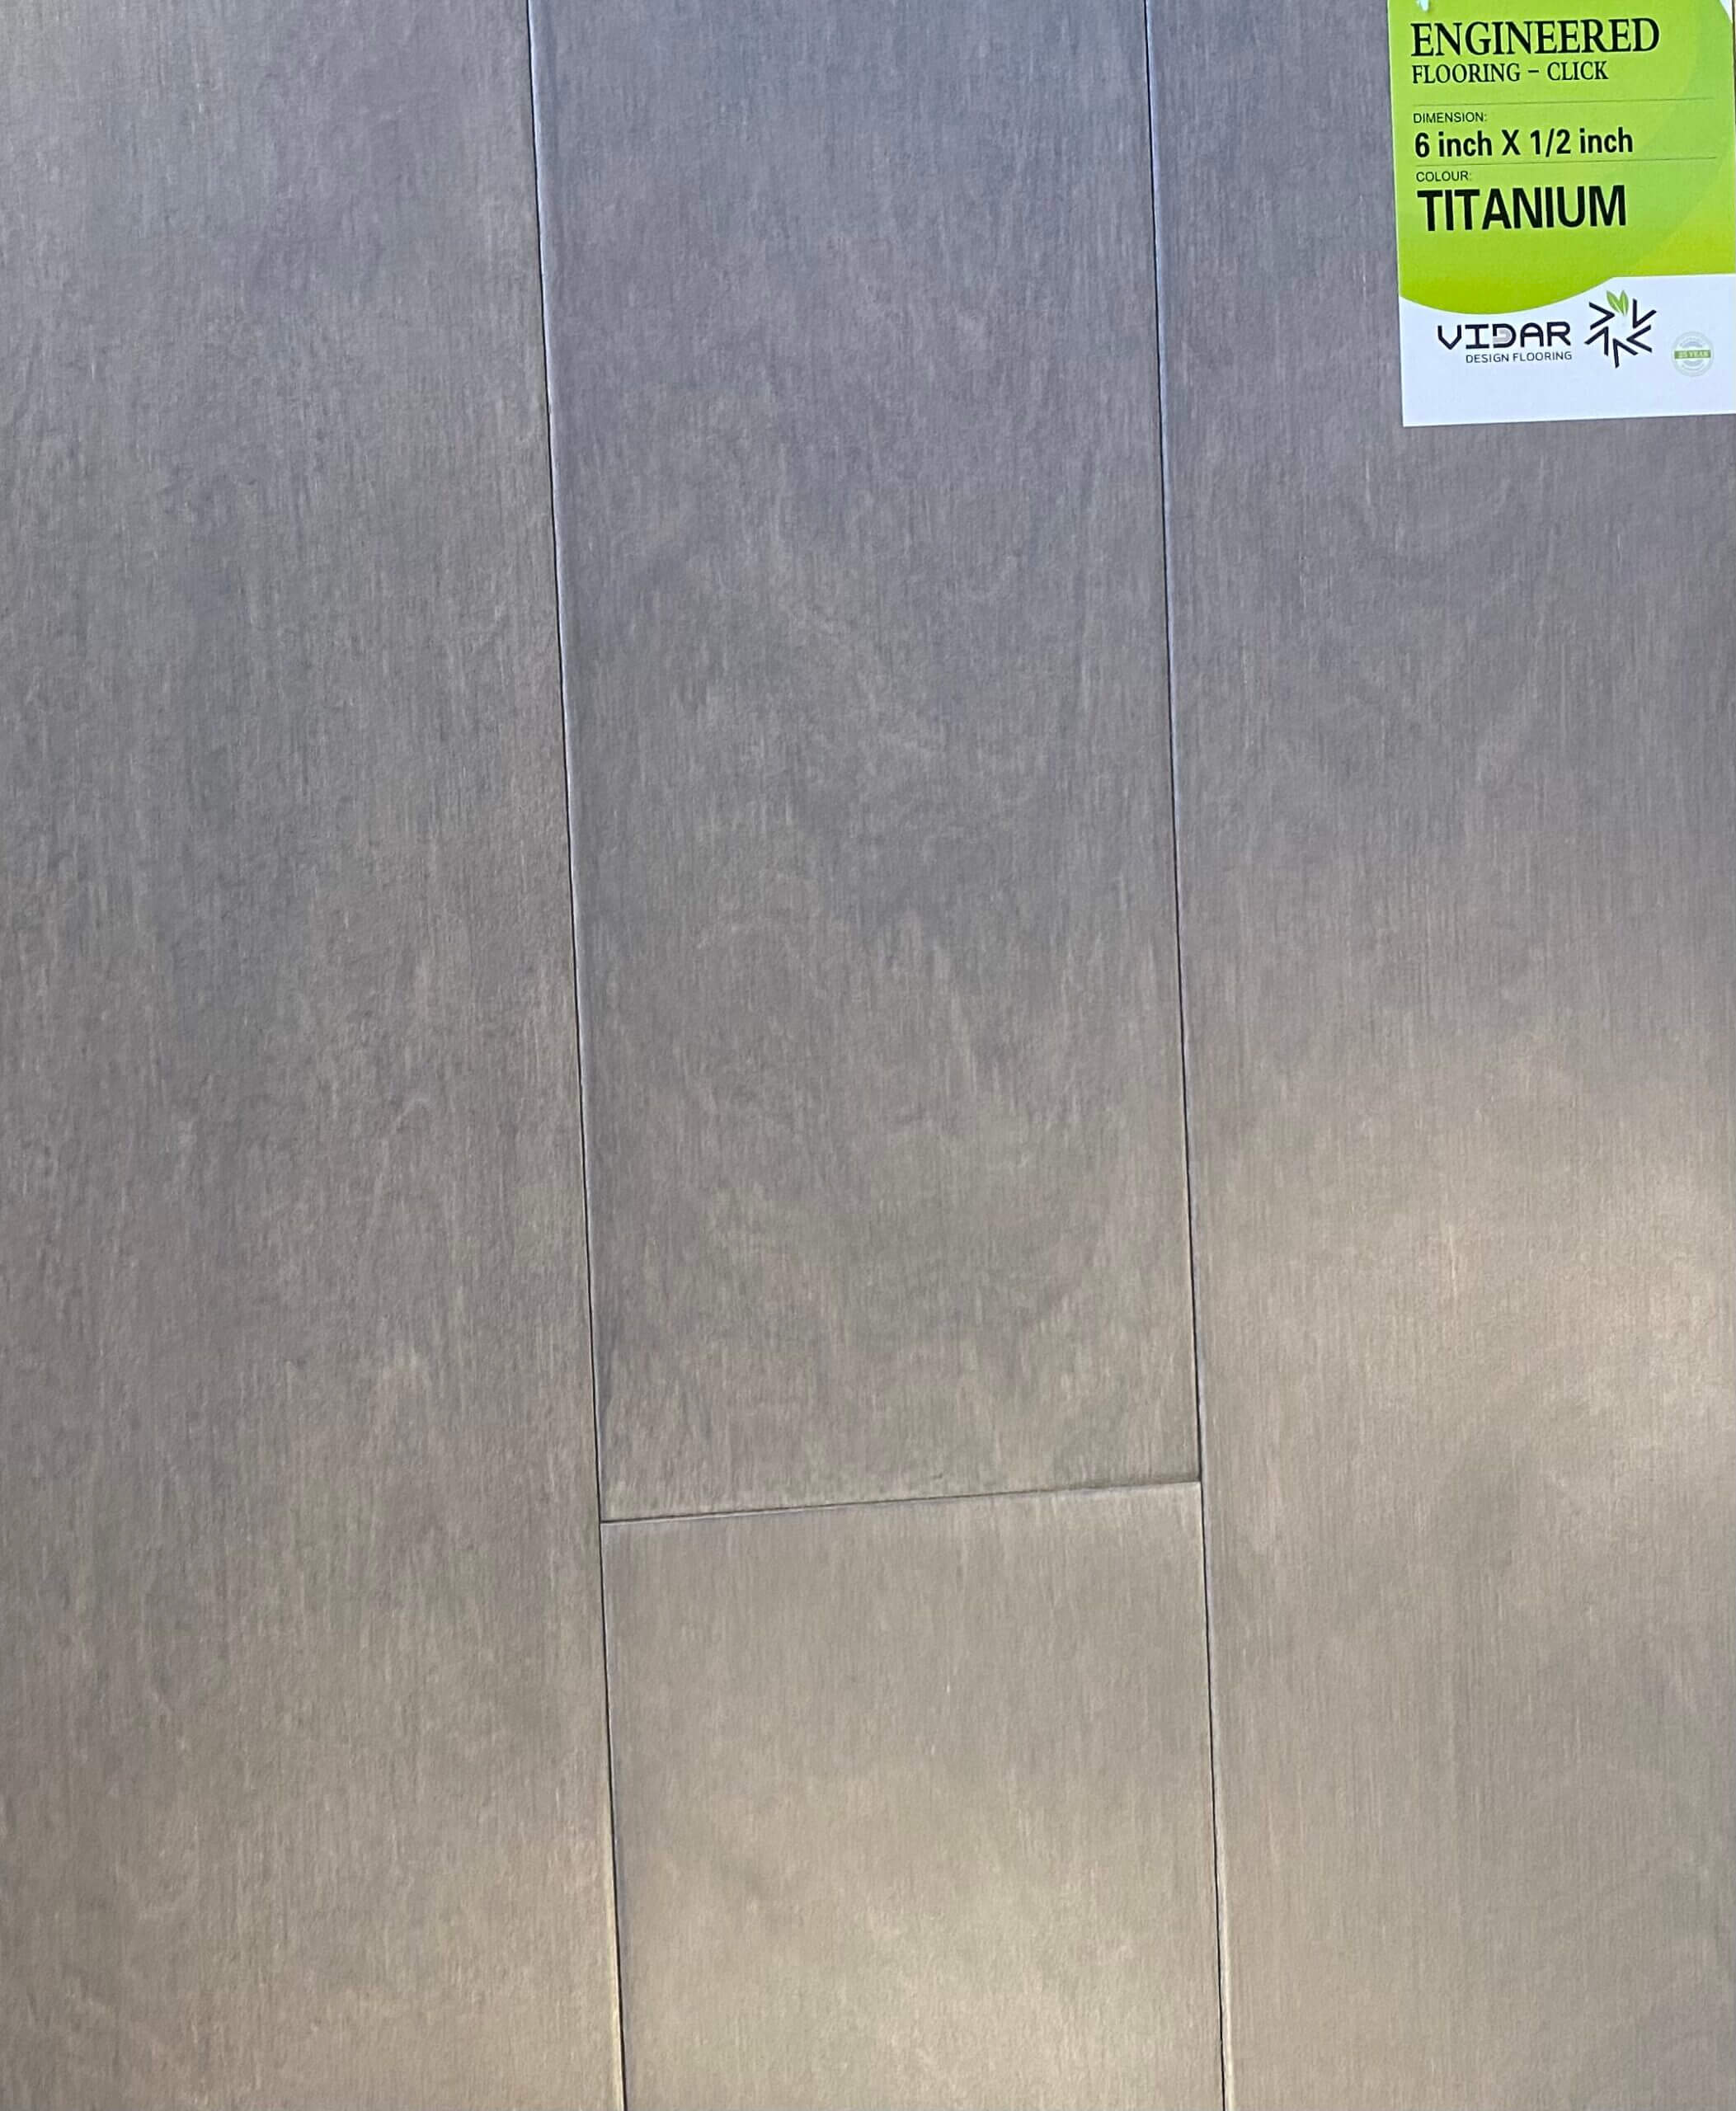 Vidar Engineered Flooring Titanium 6″ x 1/2″